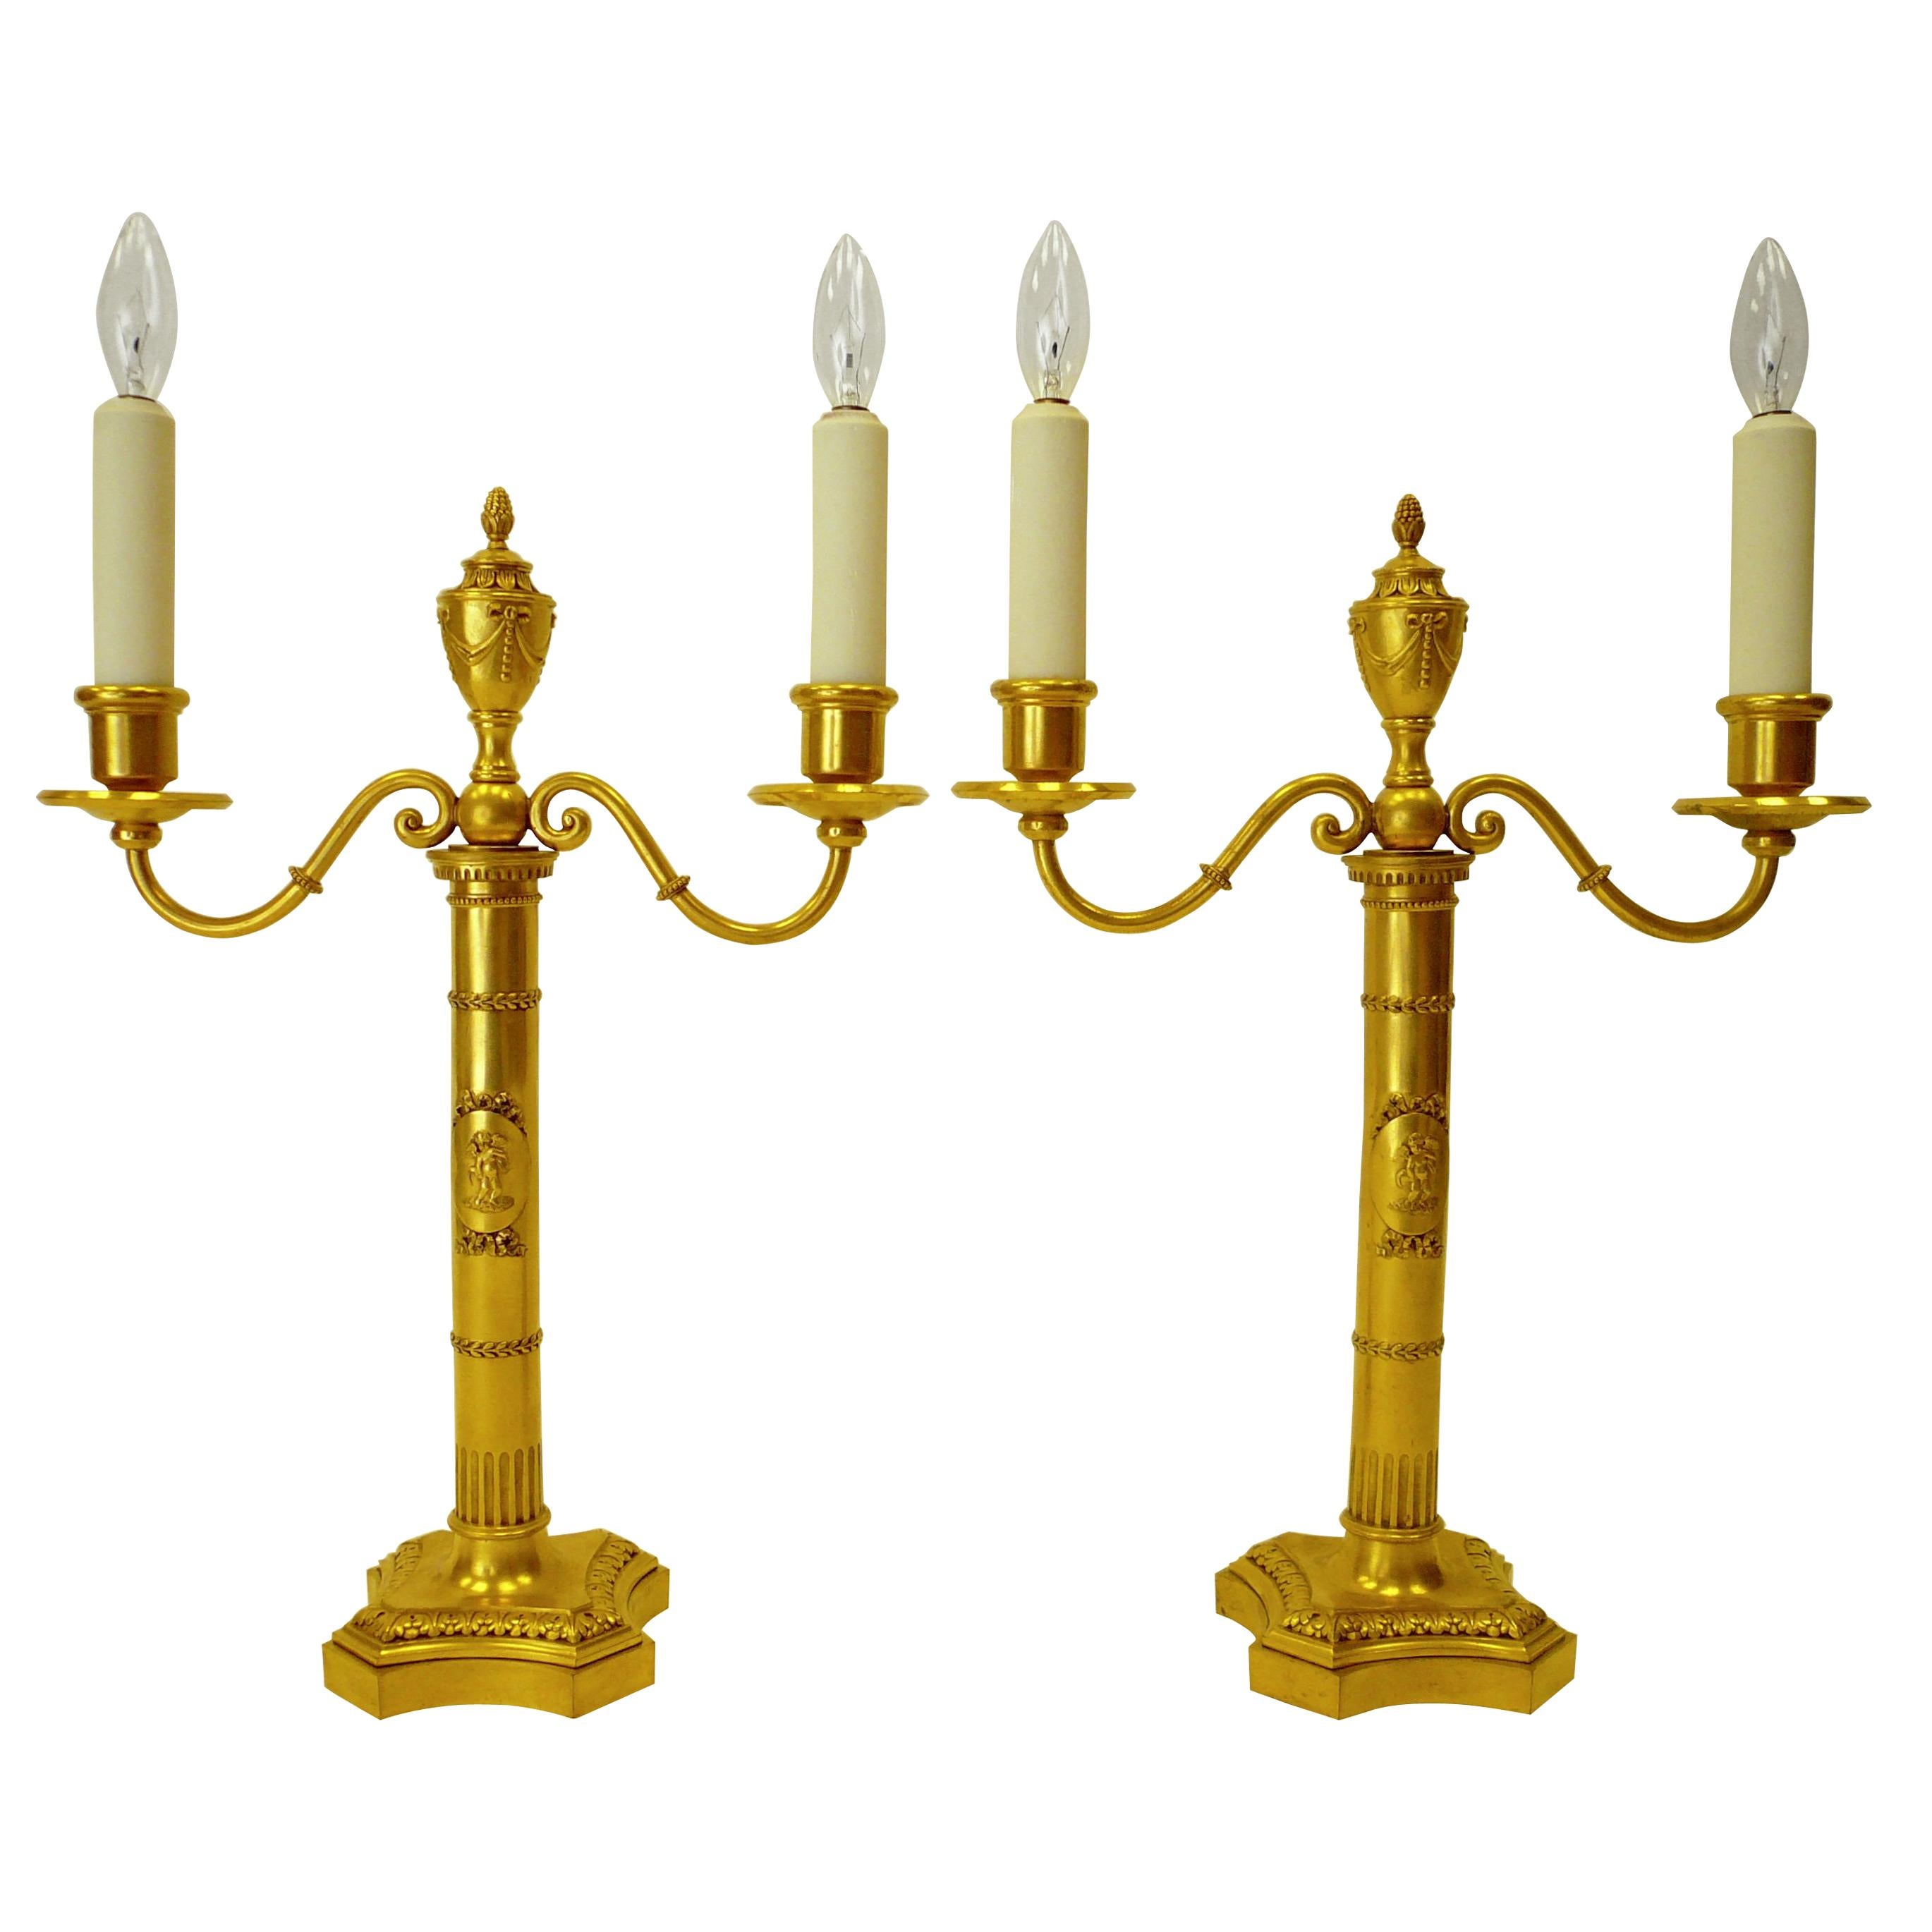 Pair of E. F. Caldwell Gilt Bronze Robert Adam Style Candelabra Form Lamps